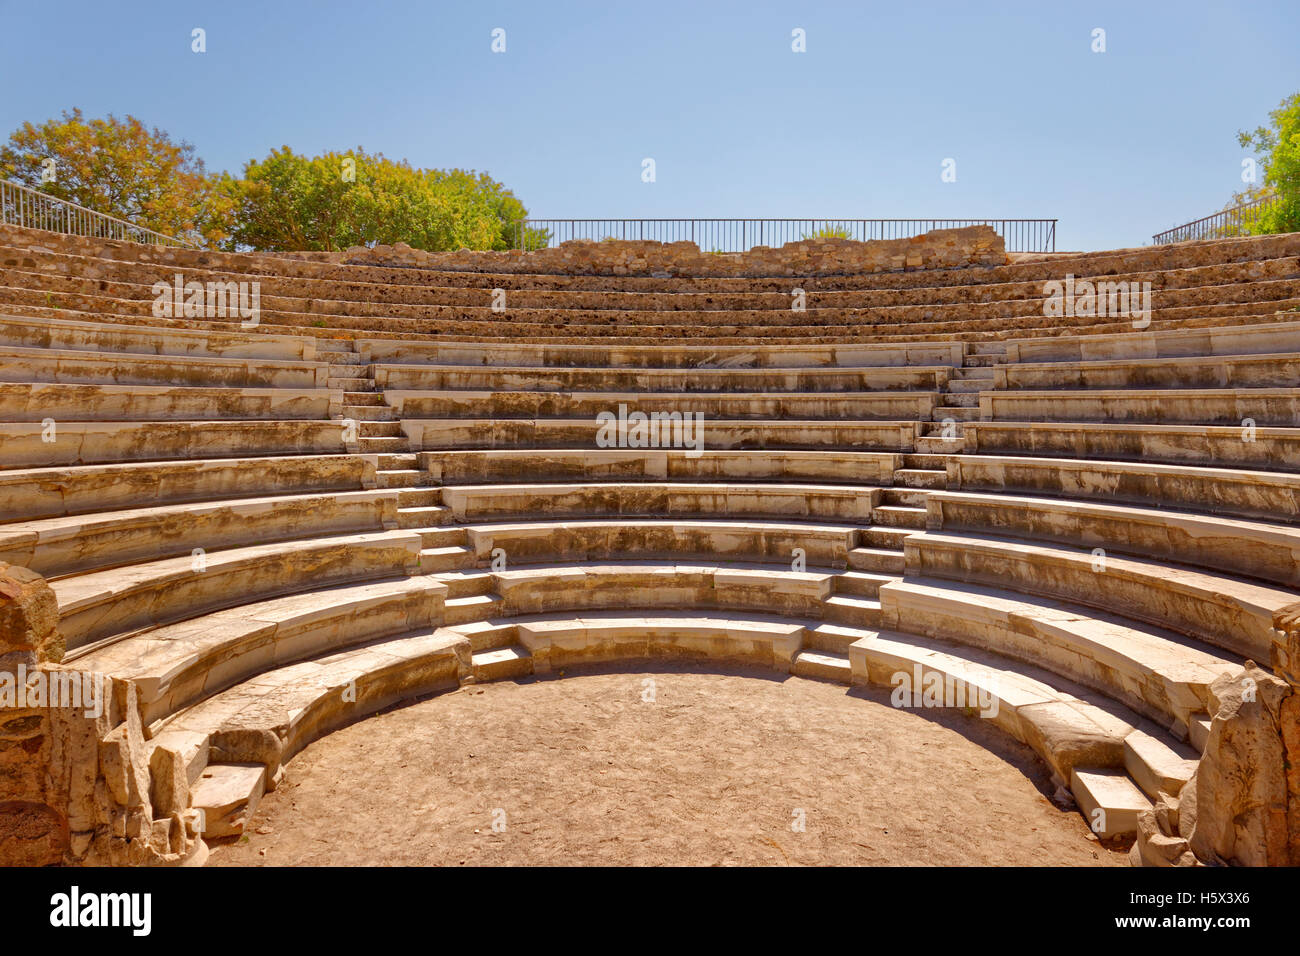 Odeon roman amphitheatre at Kos, Kos Island, Dodecanese Group, Aegean Sea, Greece Stock Photo